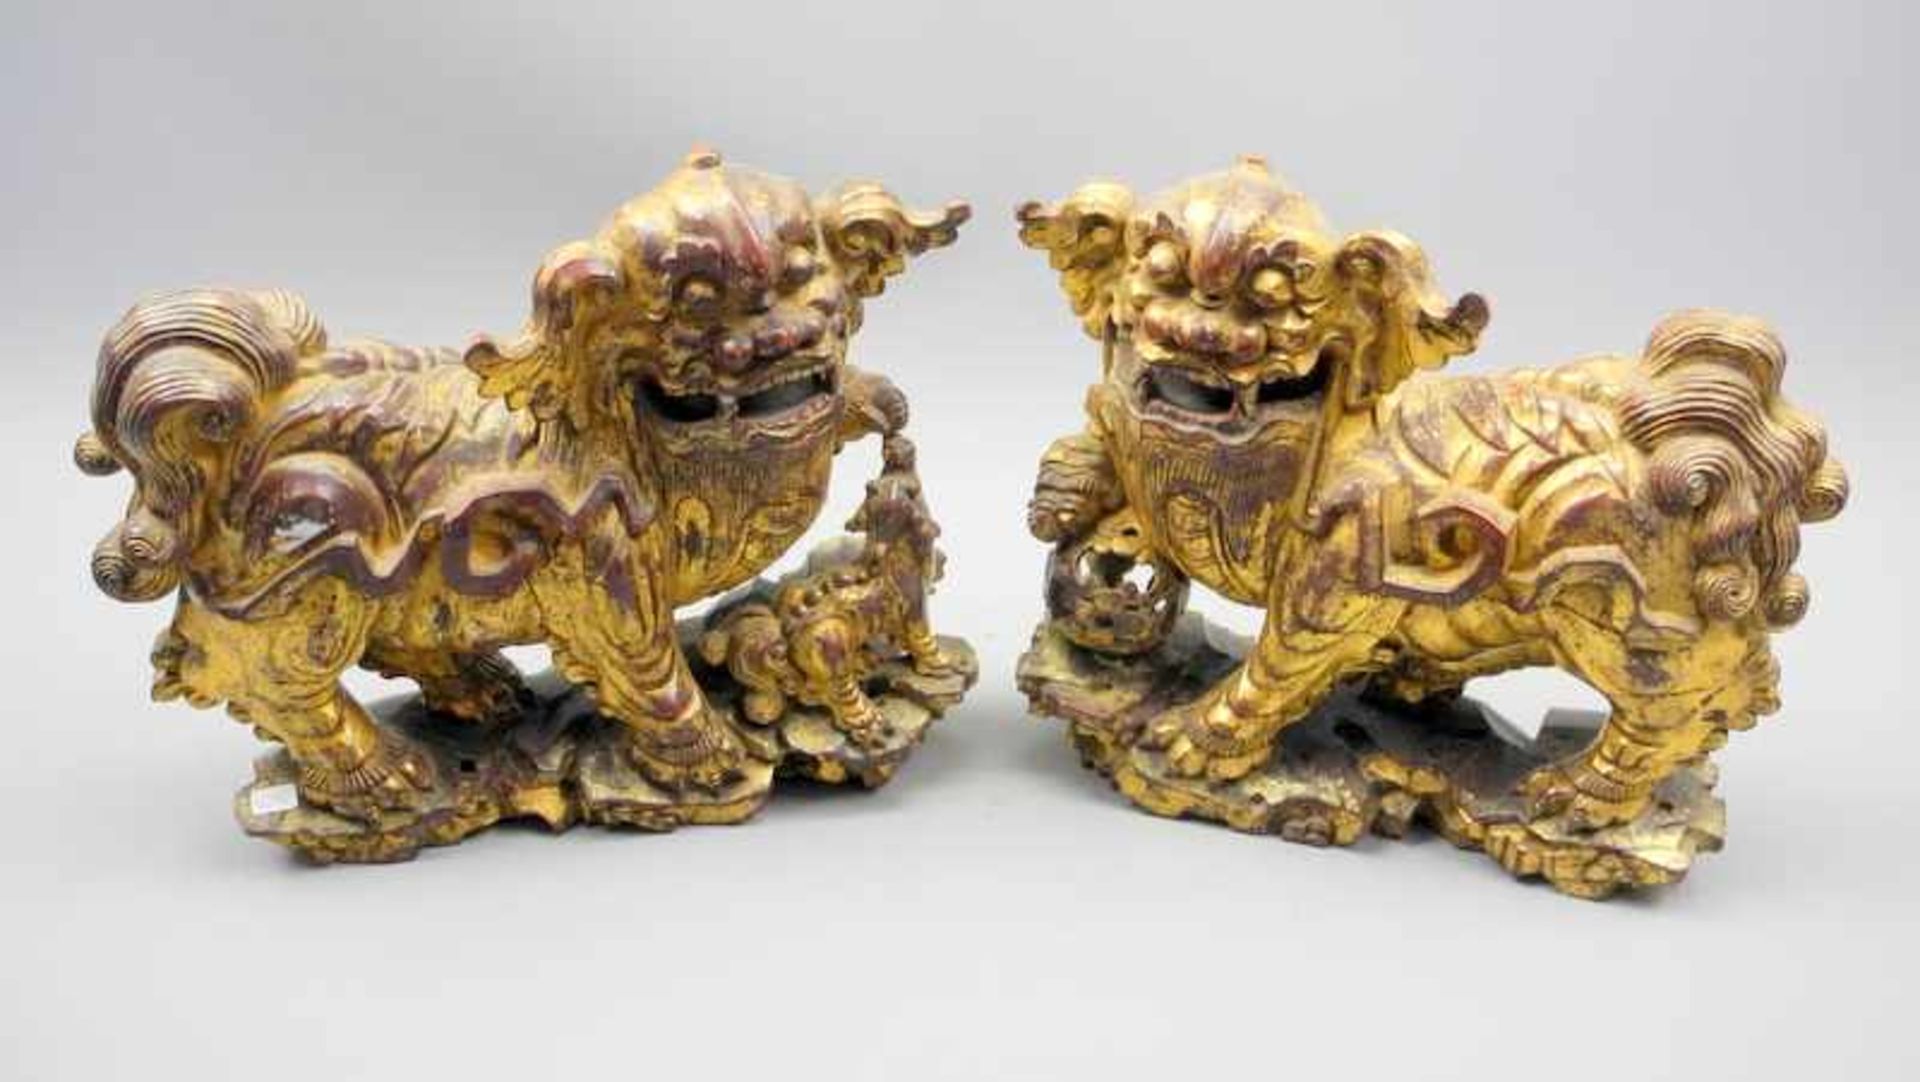 Hochwertiges Paar Fo-HundeHolz geschnitzt, vergoldet. Zwei Fo-Hunde als Gegenpaar in feiner